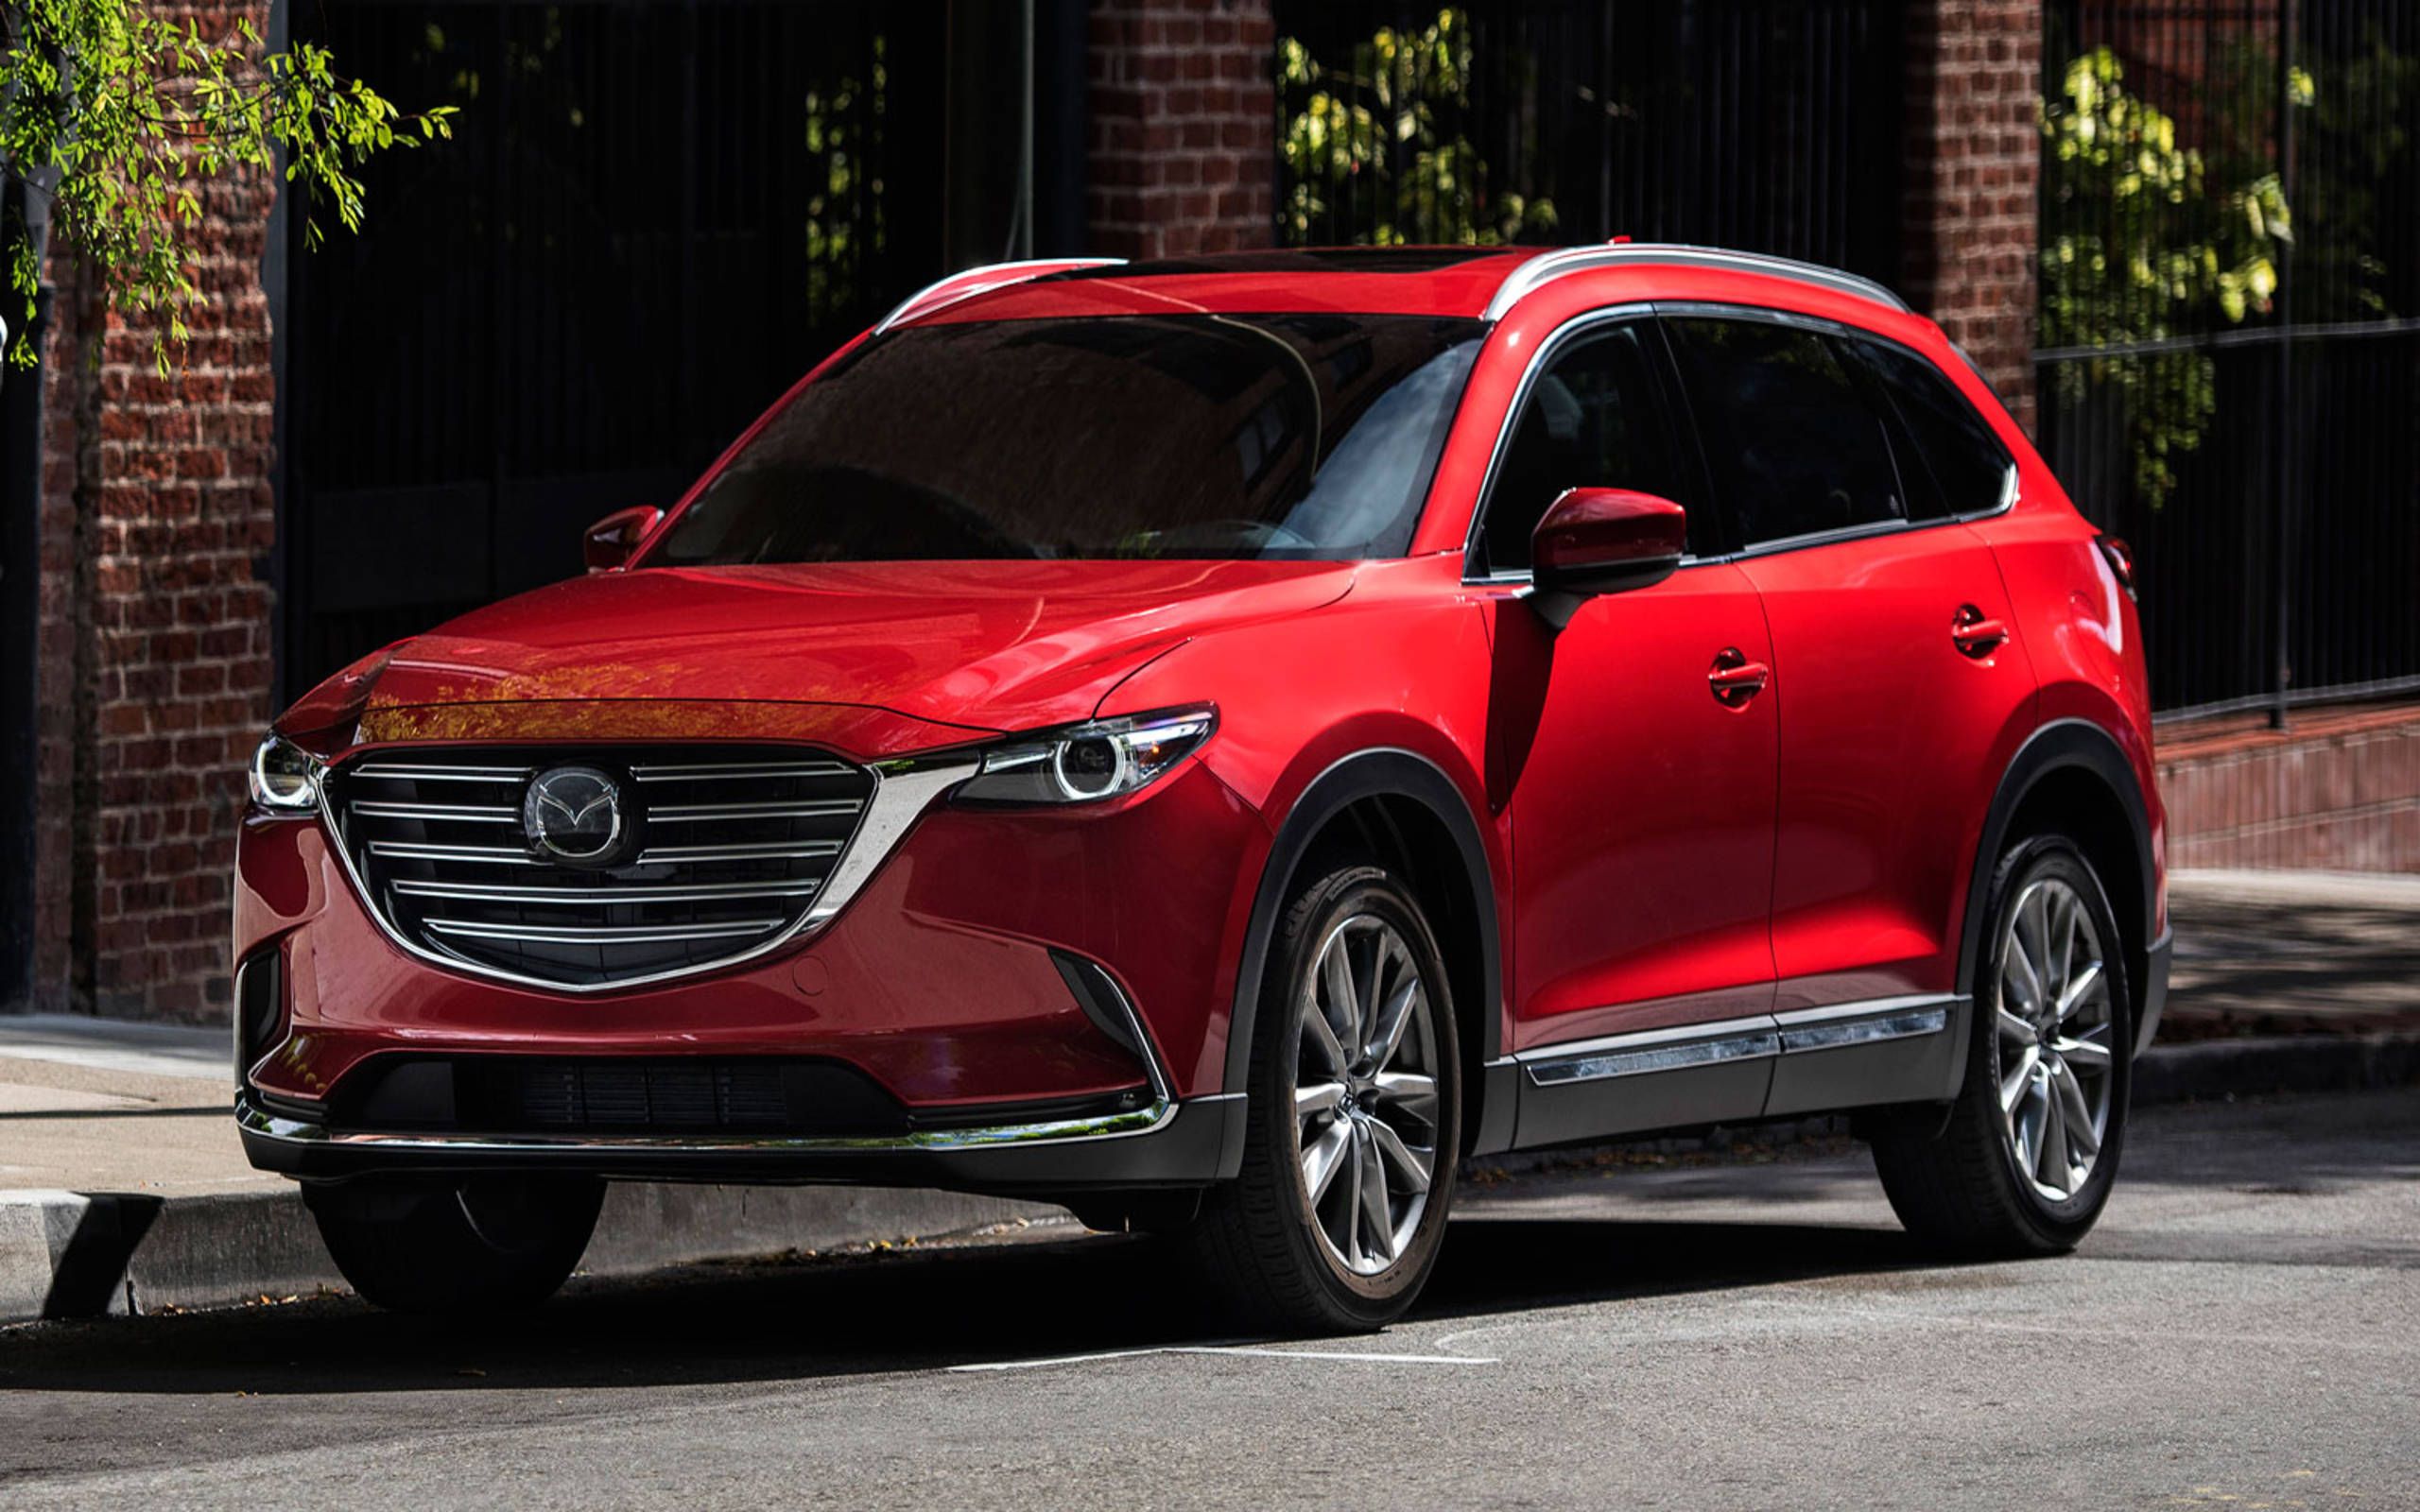 2016 Mazda CX-9 first drive: Worth the wait